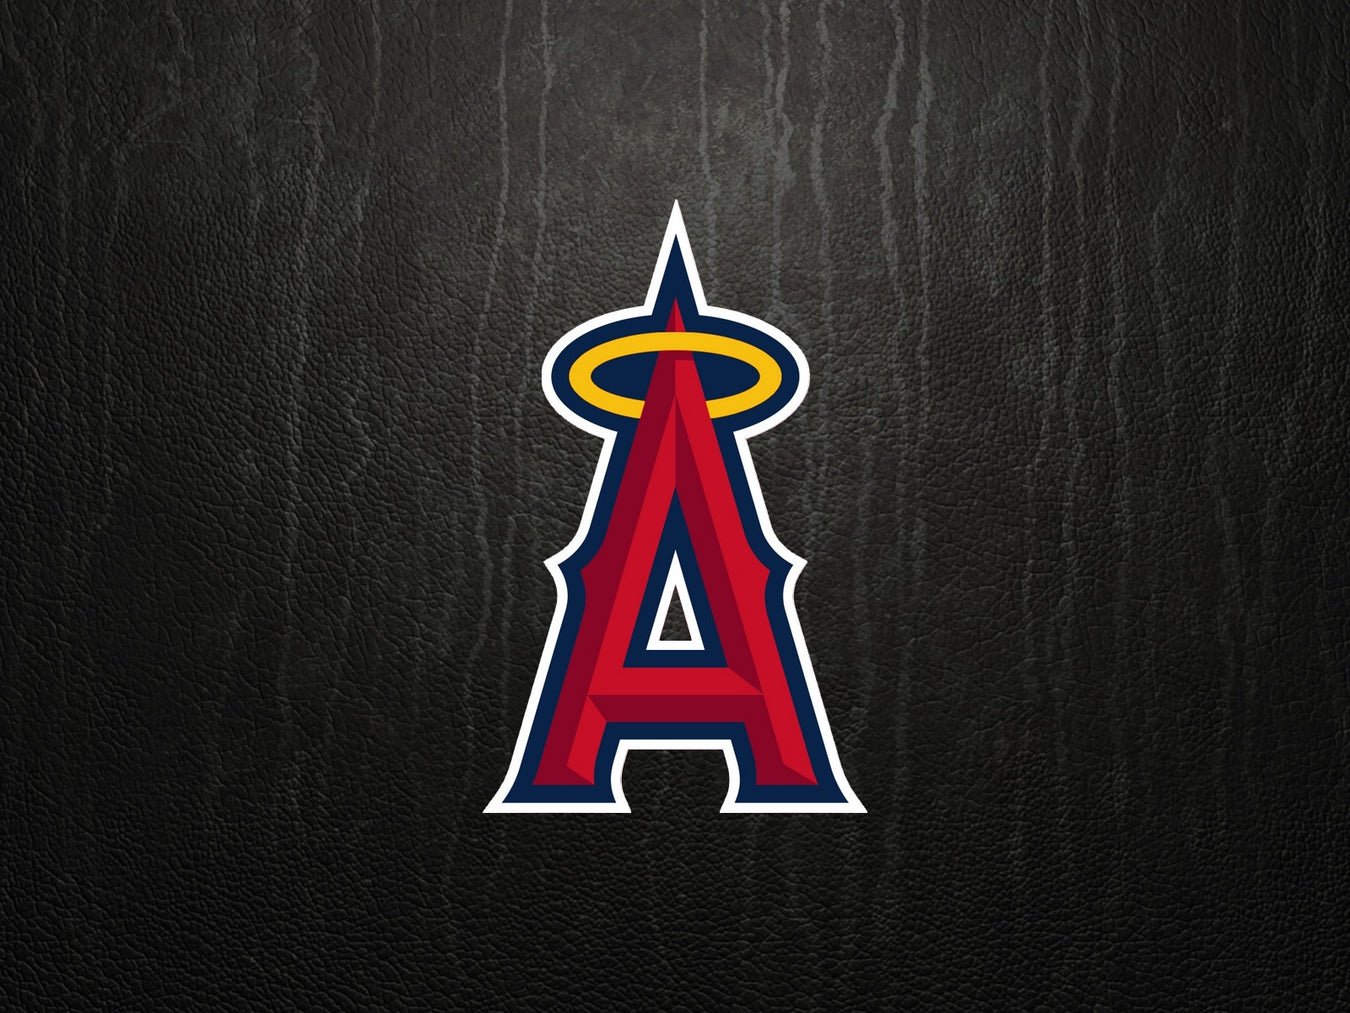 LA Angels of Anaheim